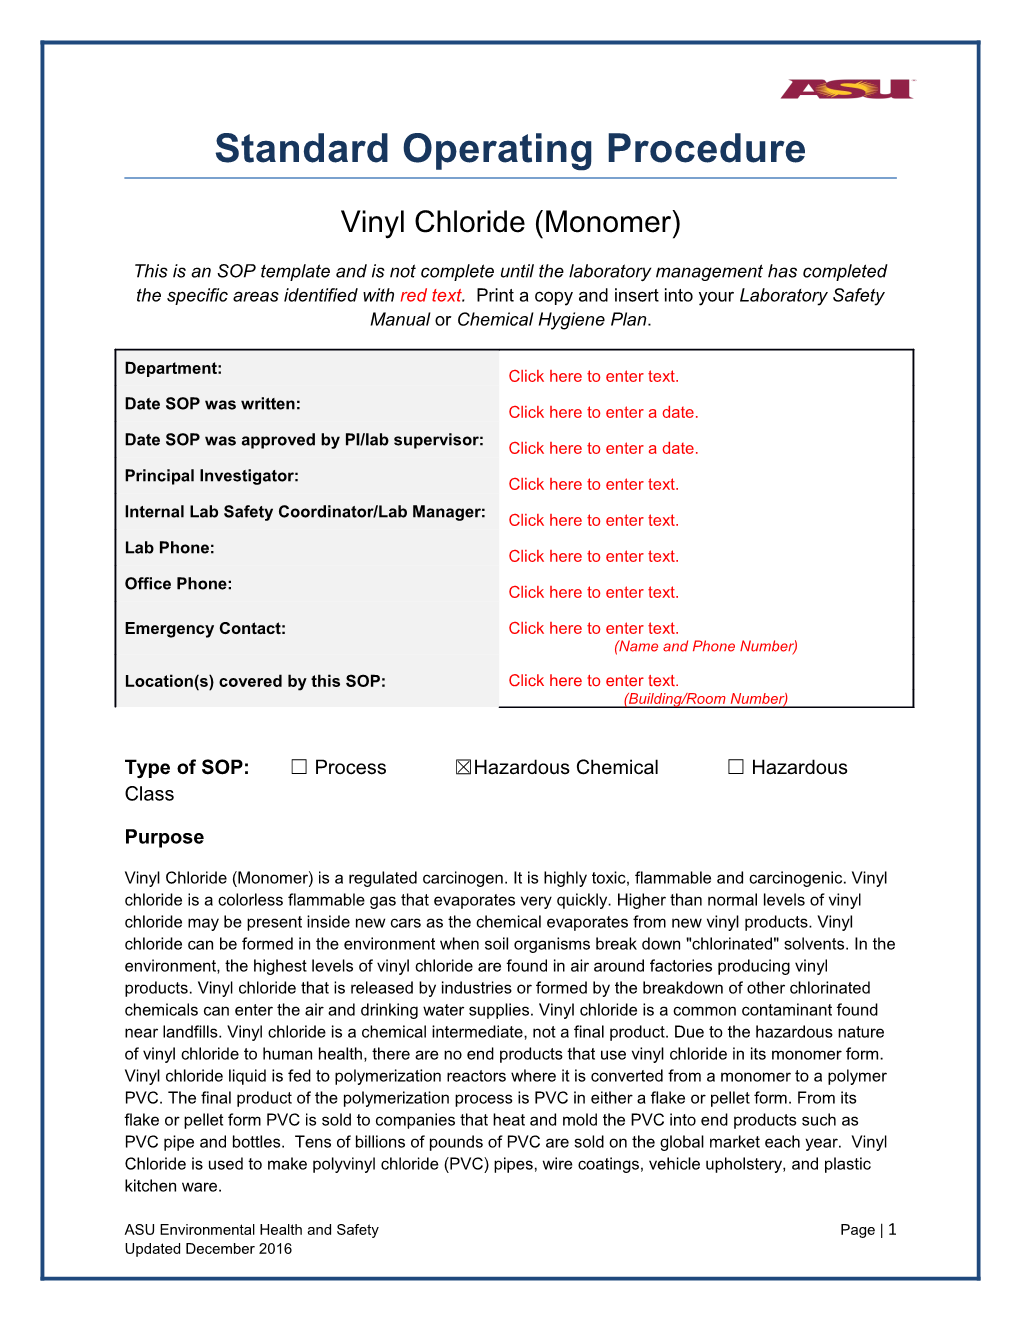 Type of SOP: Process Hazardous Chemical Hazardous Class s6